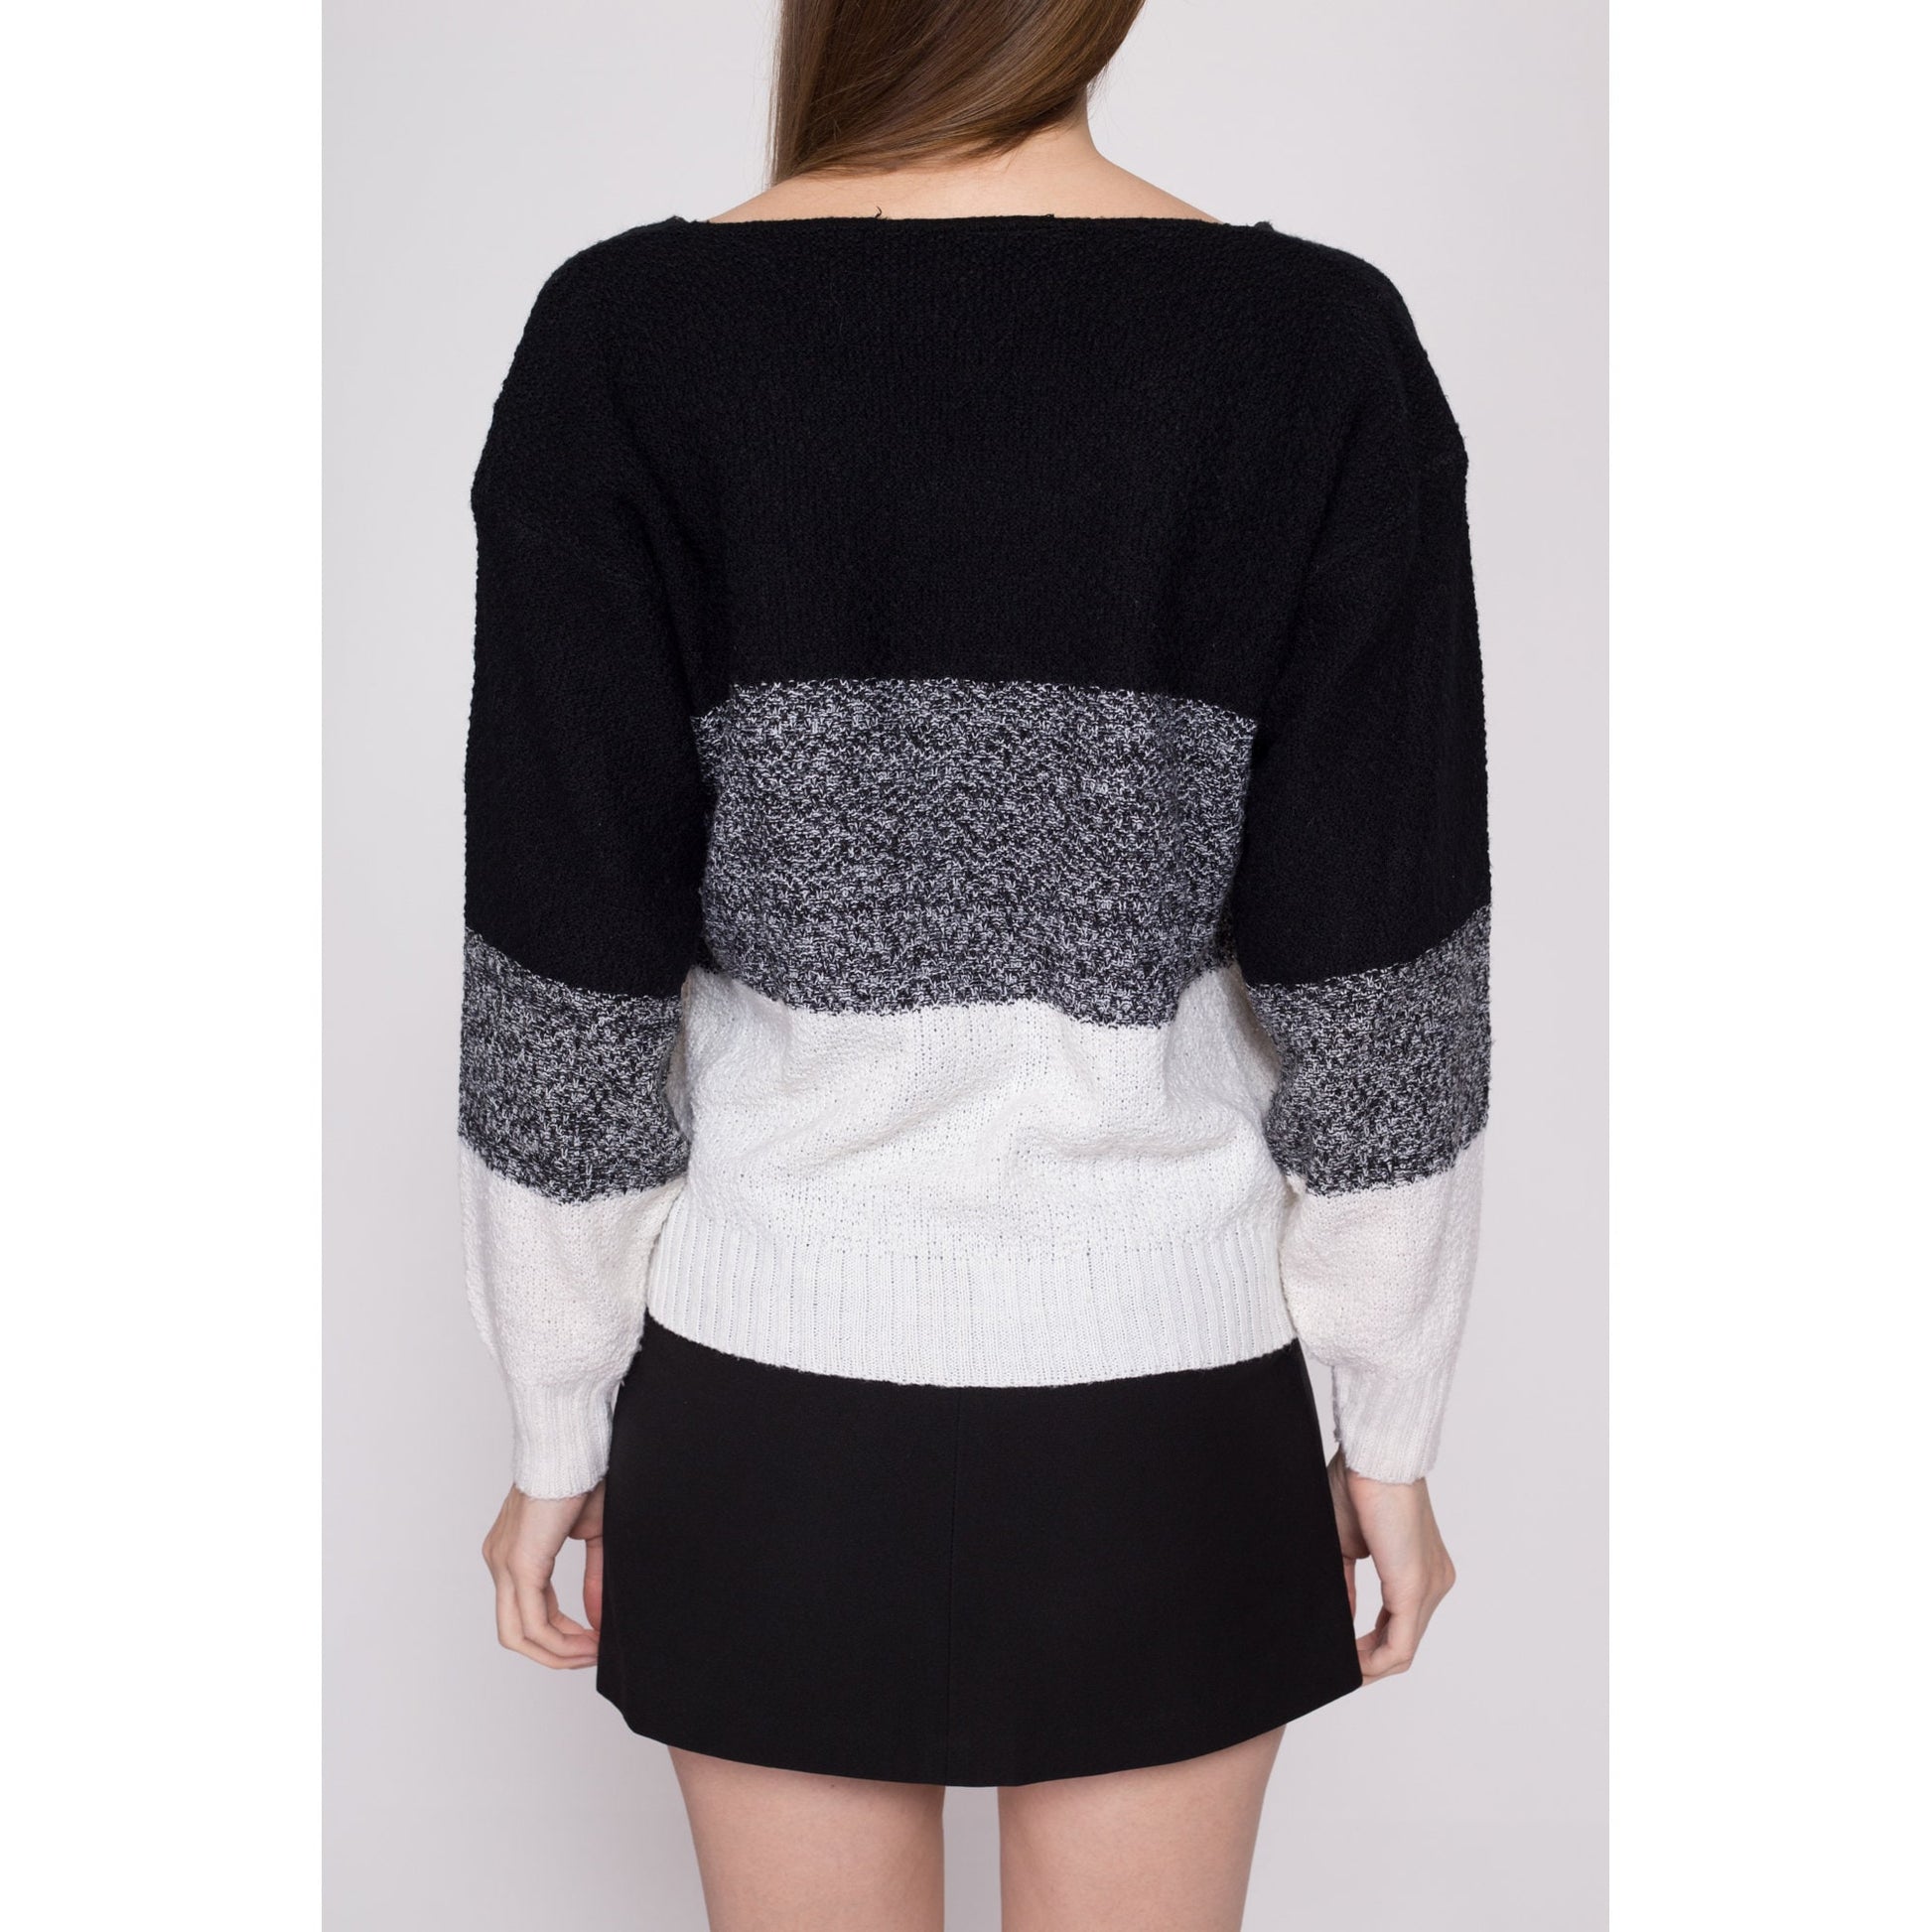 M| 80s Color Block Knit Sweater - Medium | Vintage Black White Gradient Striped Pullover